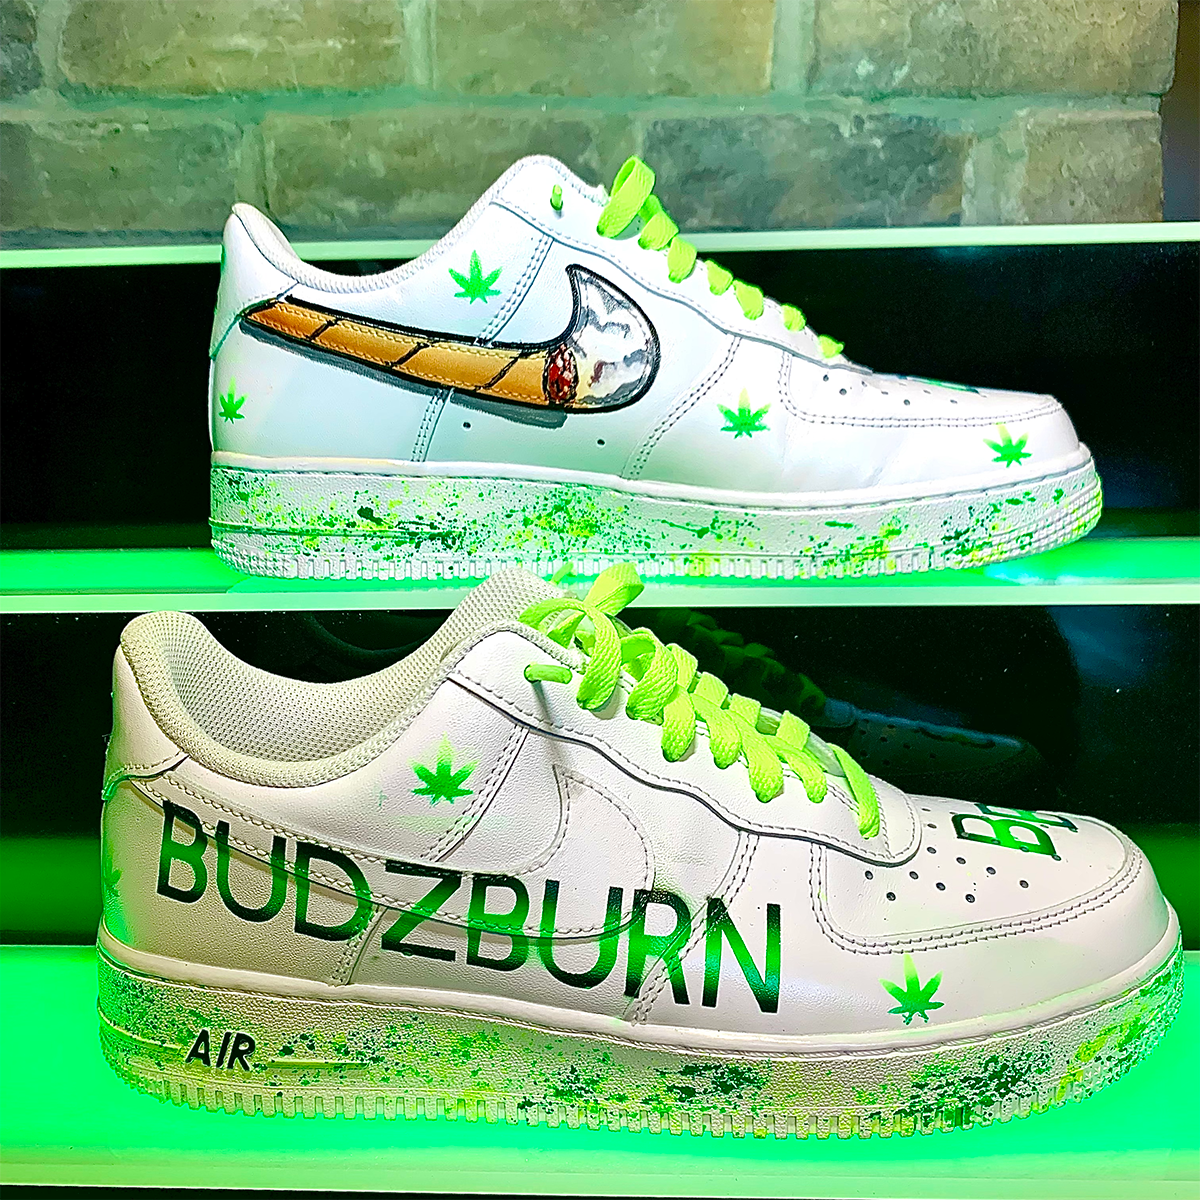 Budzburn Custom Nike Air Force Ones